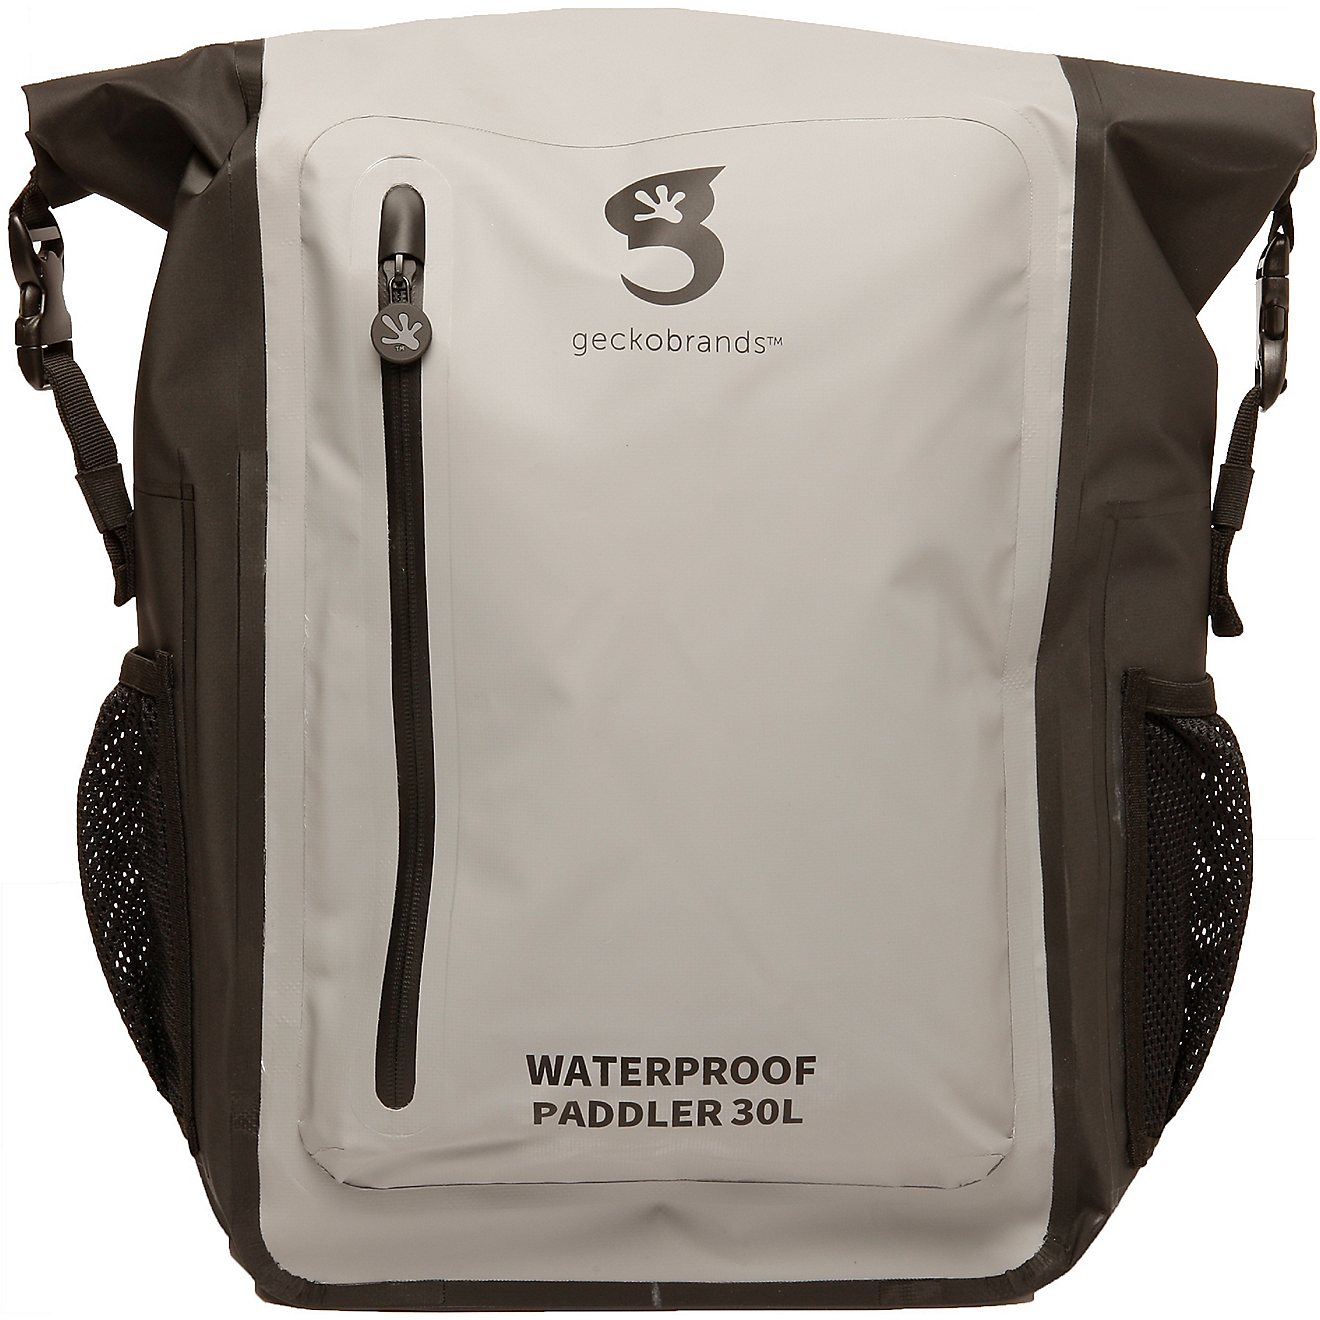 geckobrands Paddler Waterproof 30L Backpack                                                                                      - view number 1